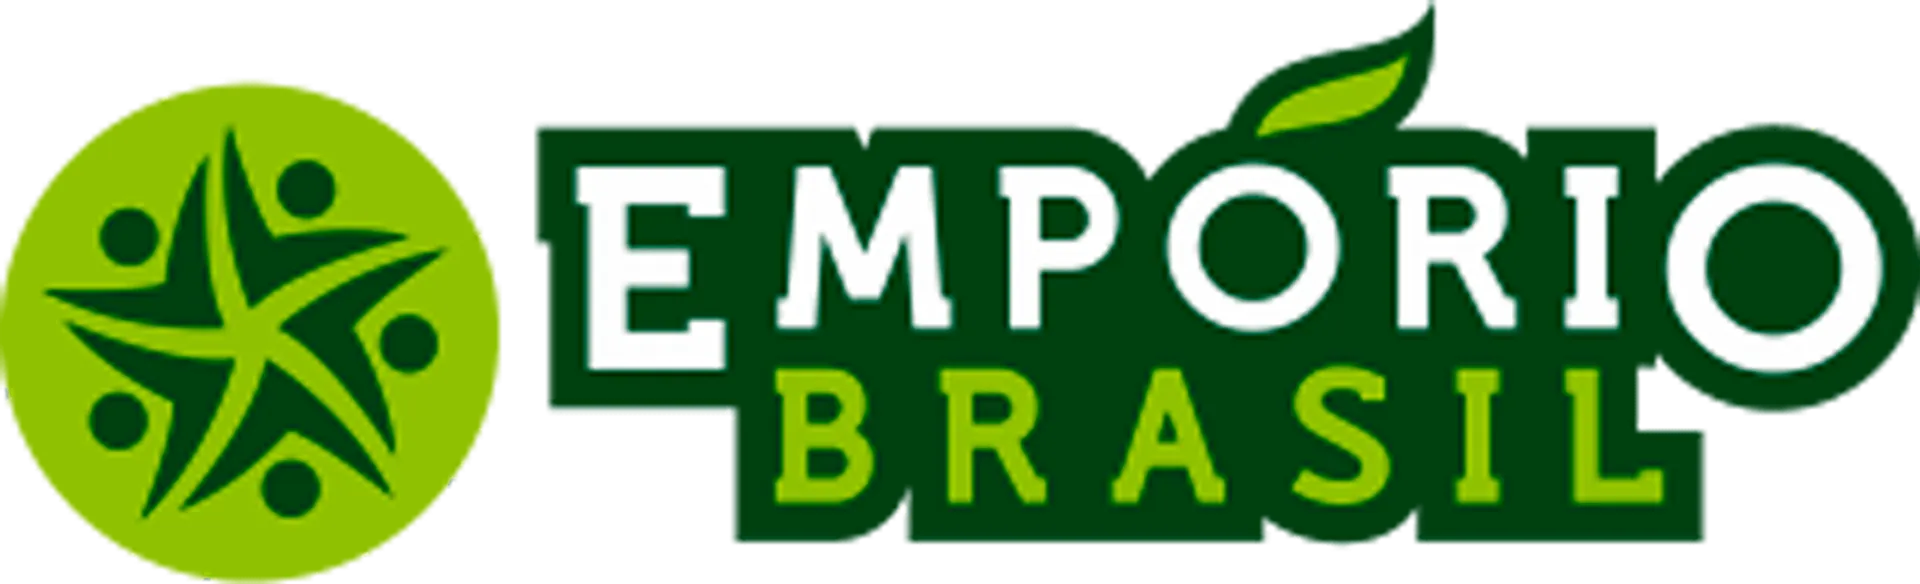 EMPÓRIO BRASIL logo